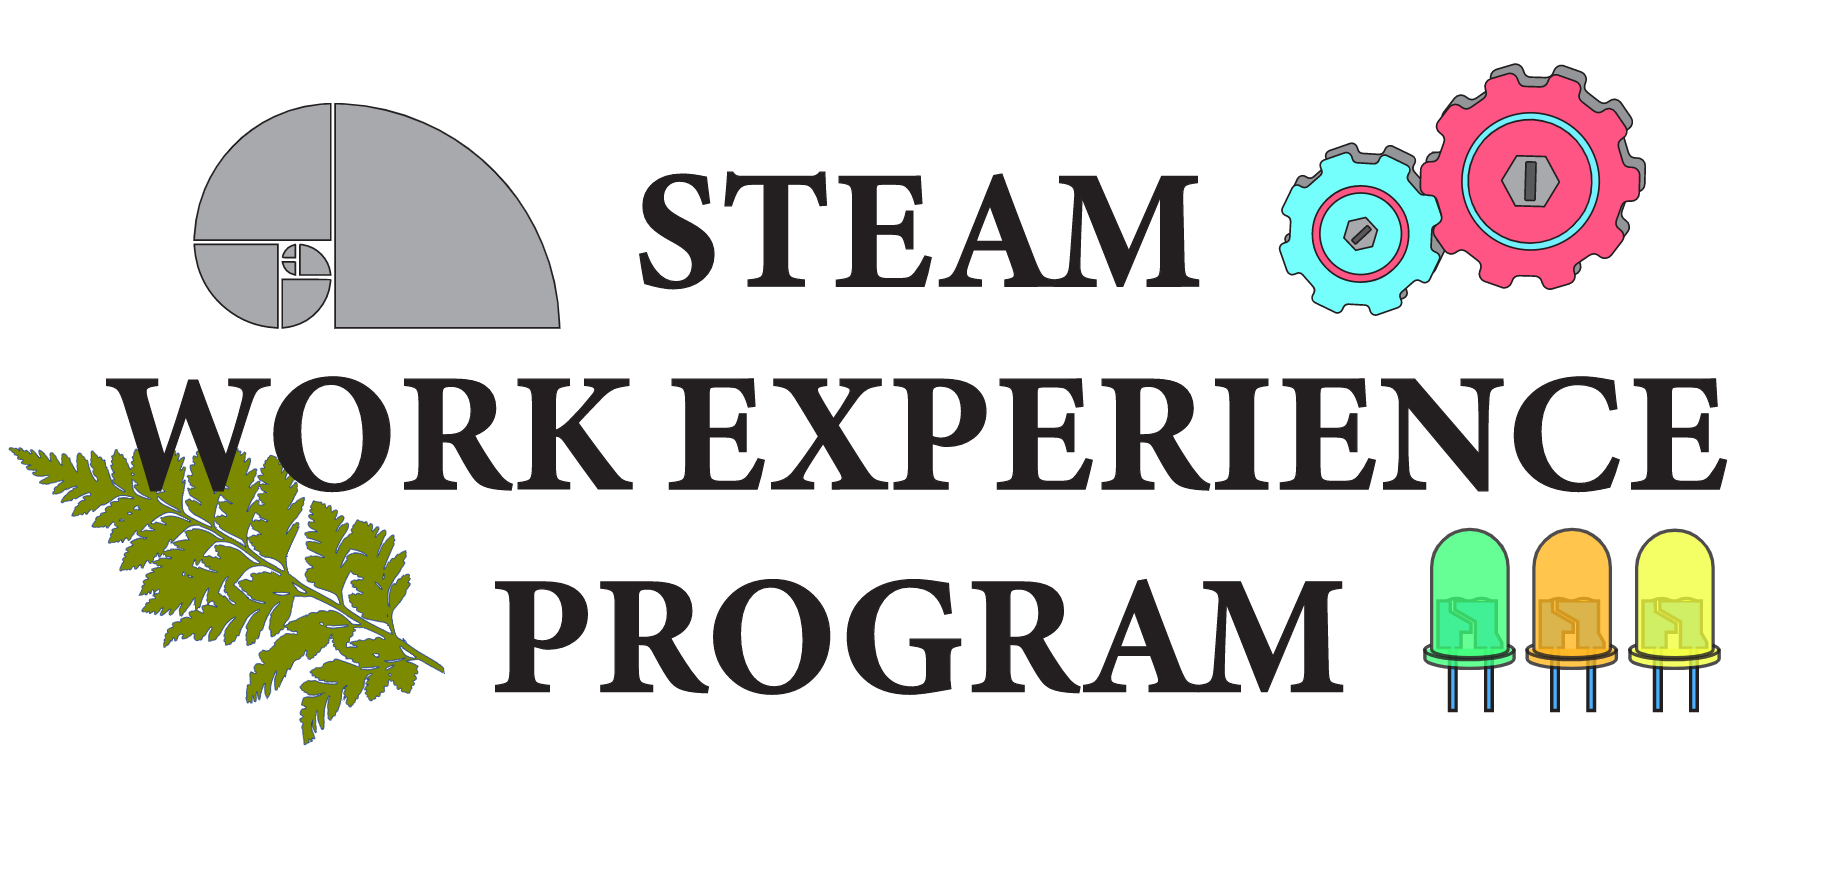 STEAM Work Experience Program